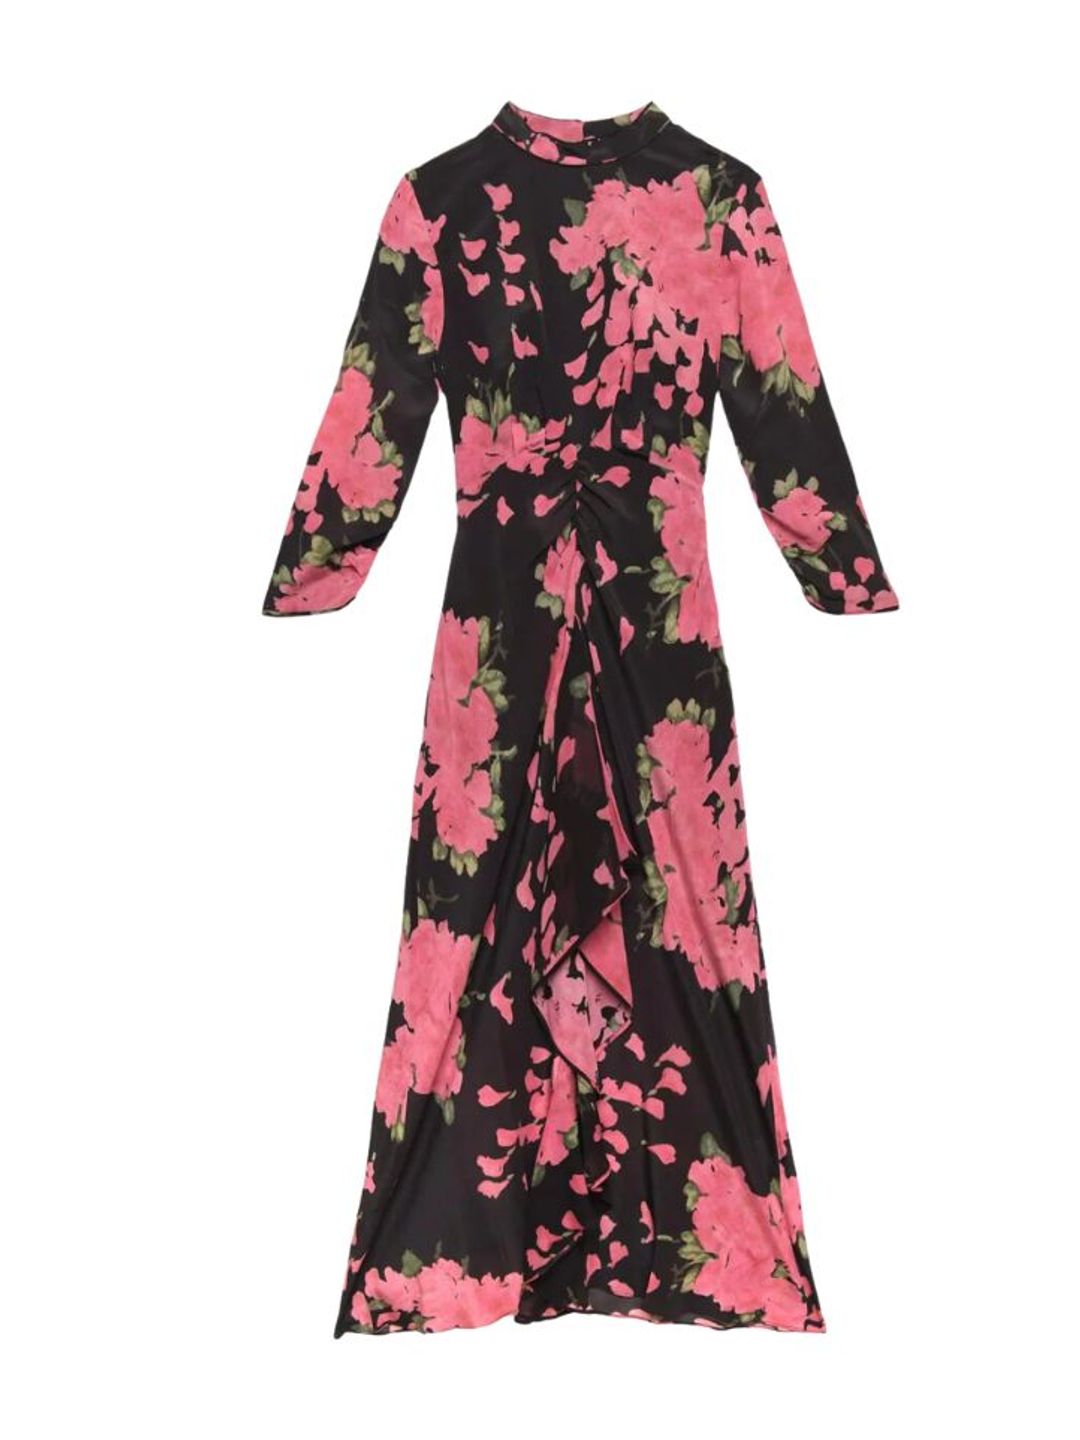 Black and pink printed floral dress 